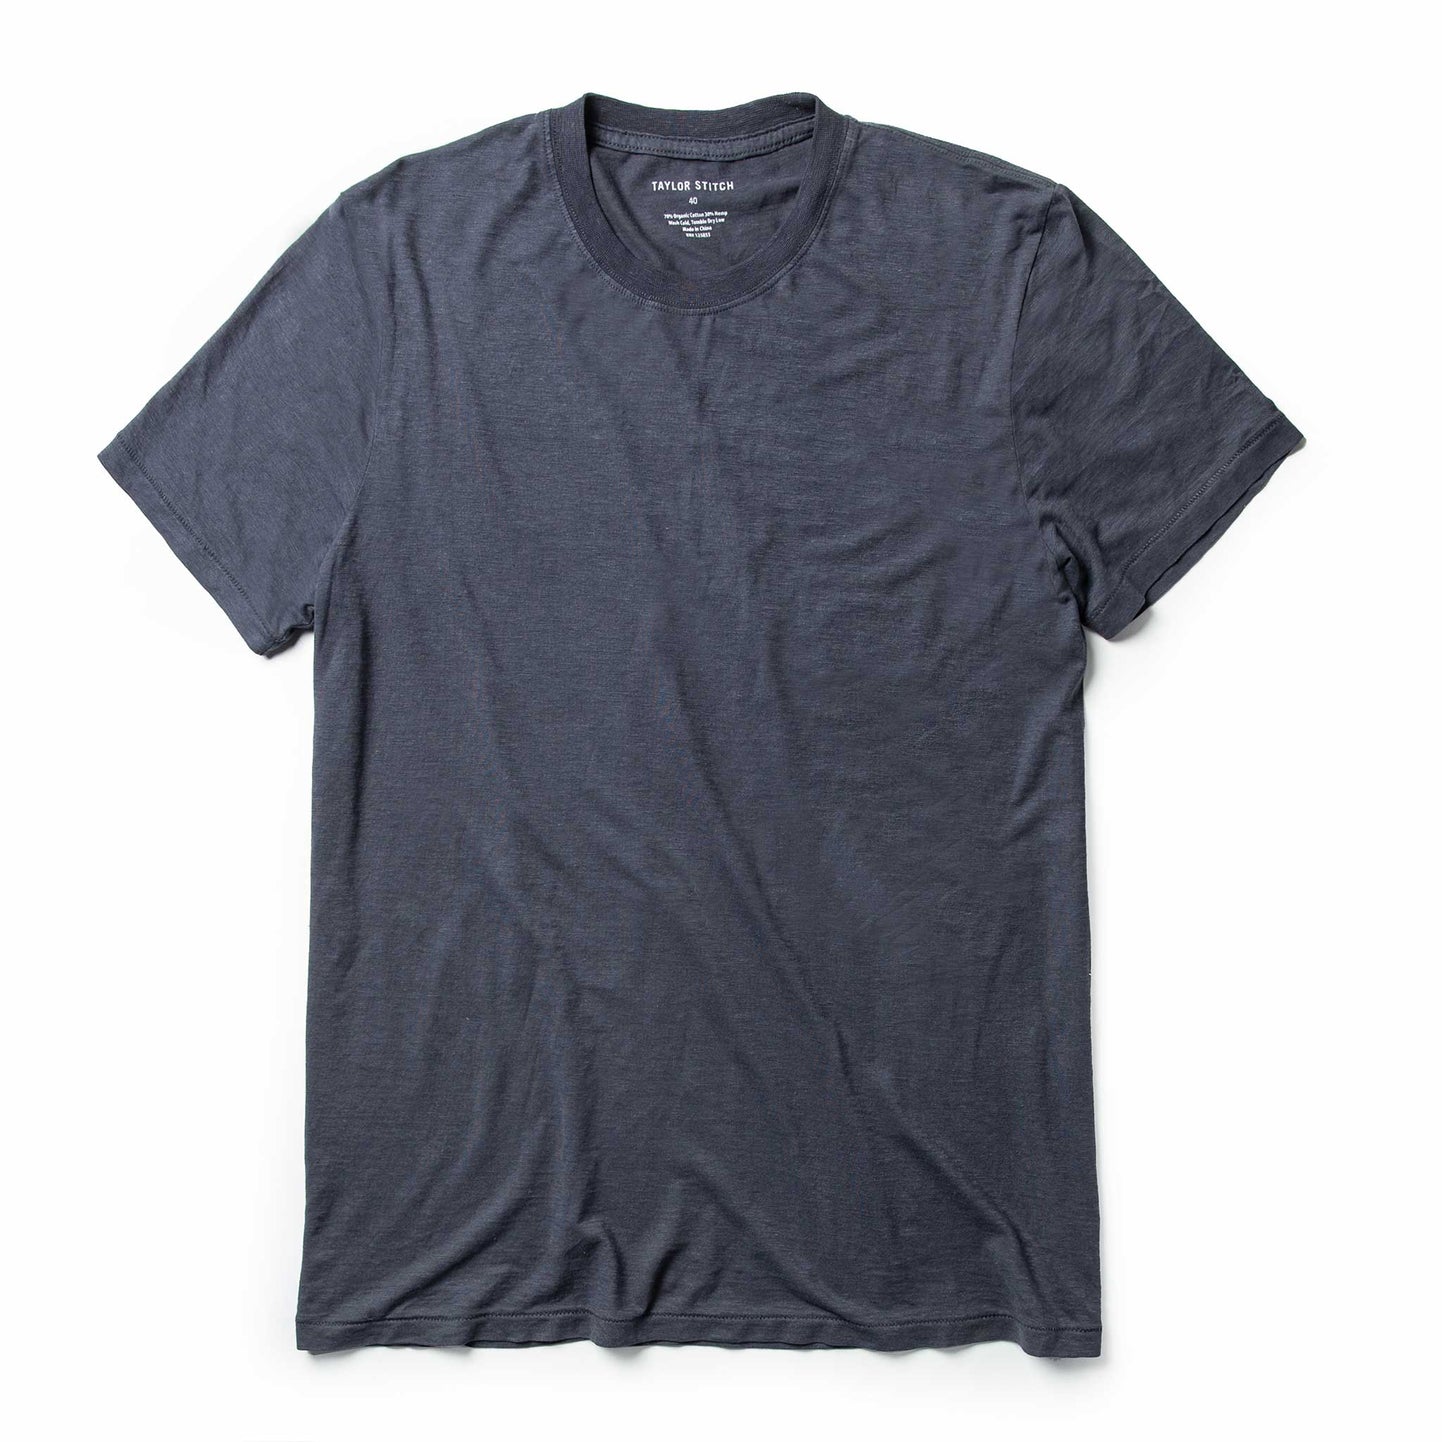 Men's Essentials - Oxford Shirts, Pants, Tees & More | Taylor Stitch ...